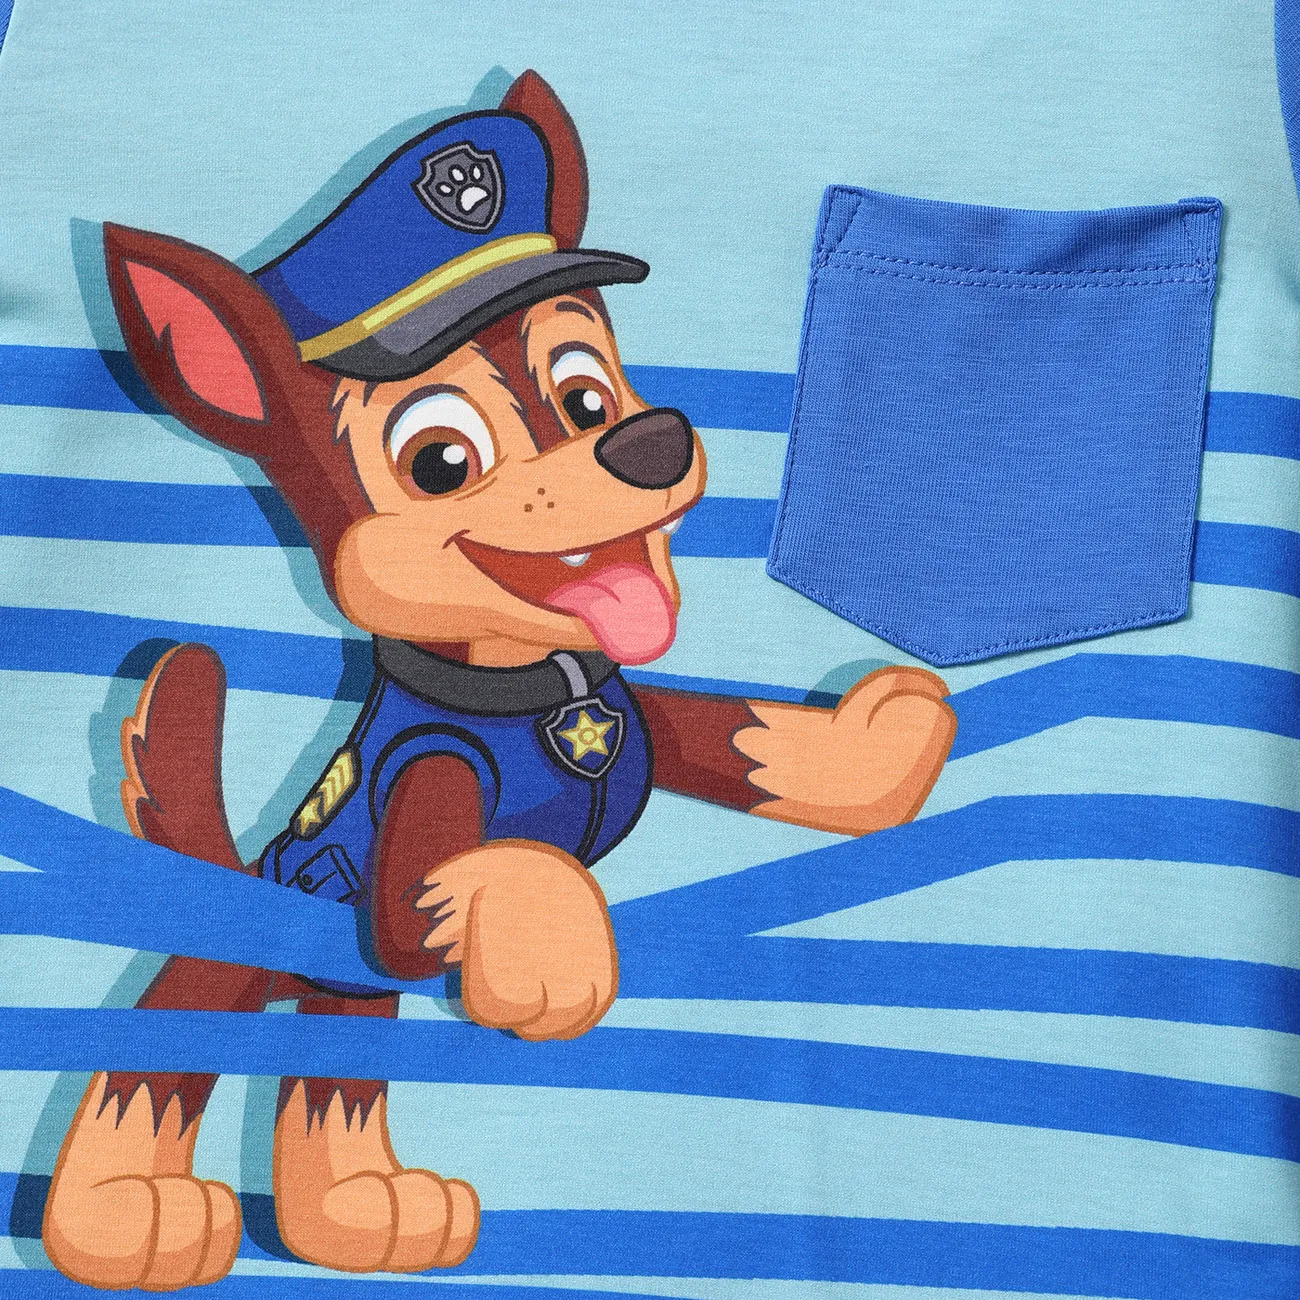 PAW Patrol 2pcs Toddler Boy Naia Stripe Short-sleeve Tee and Cotton Shorts Set BlueGreen big image 1